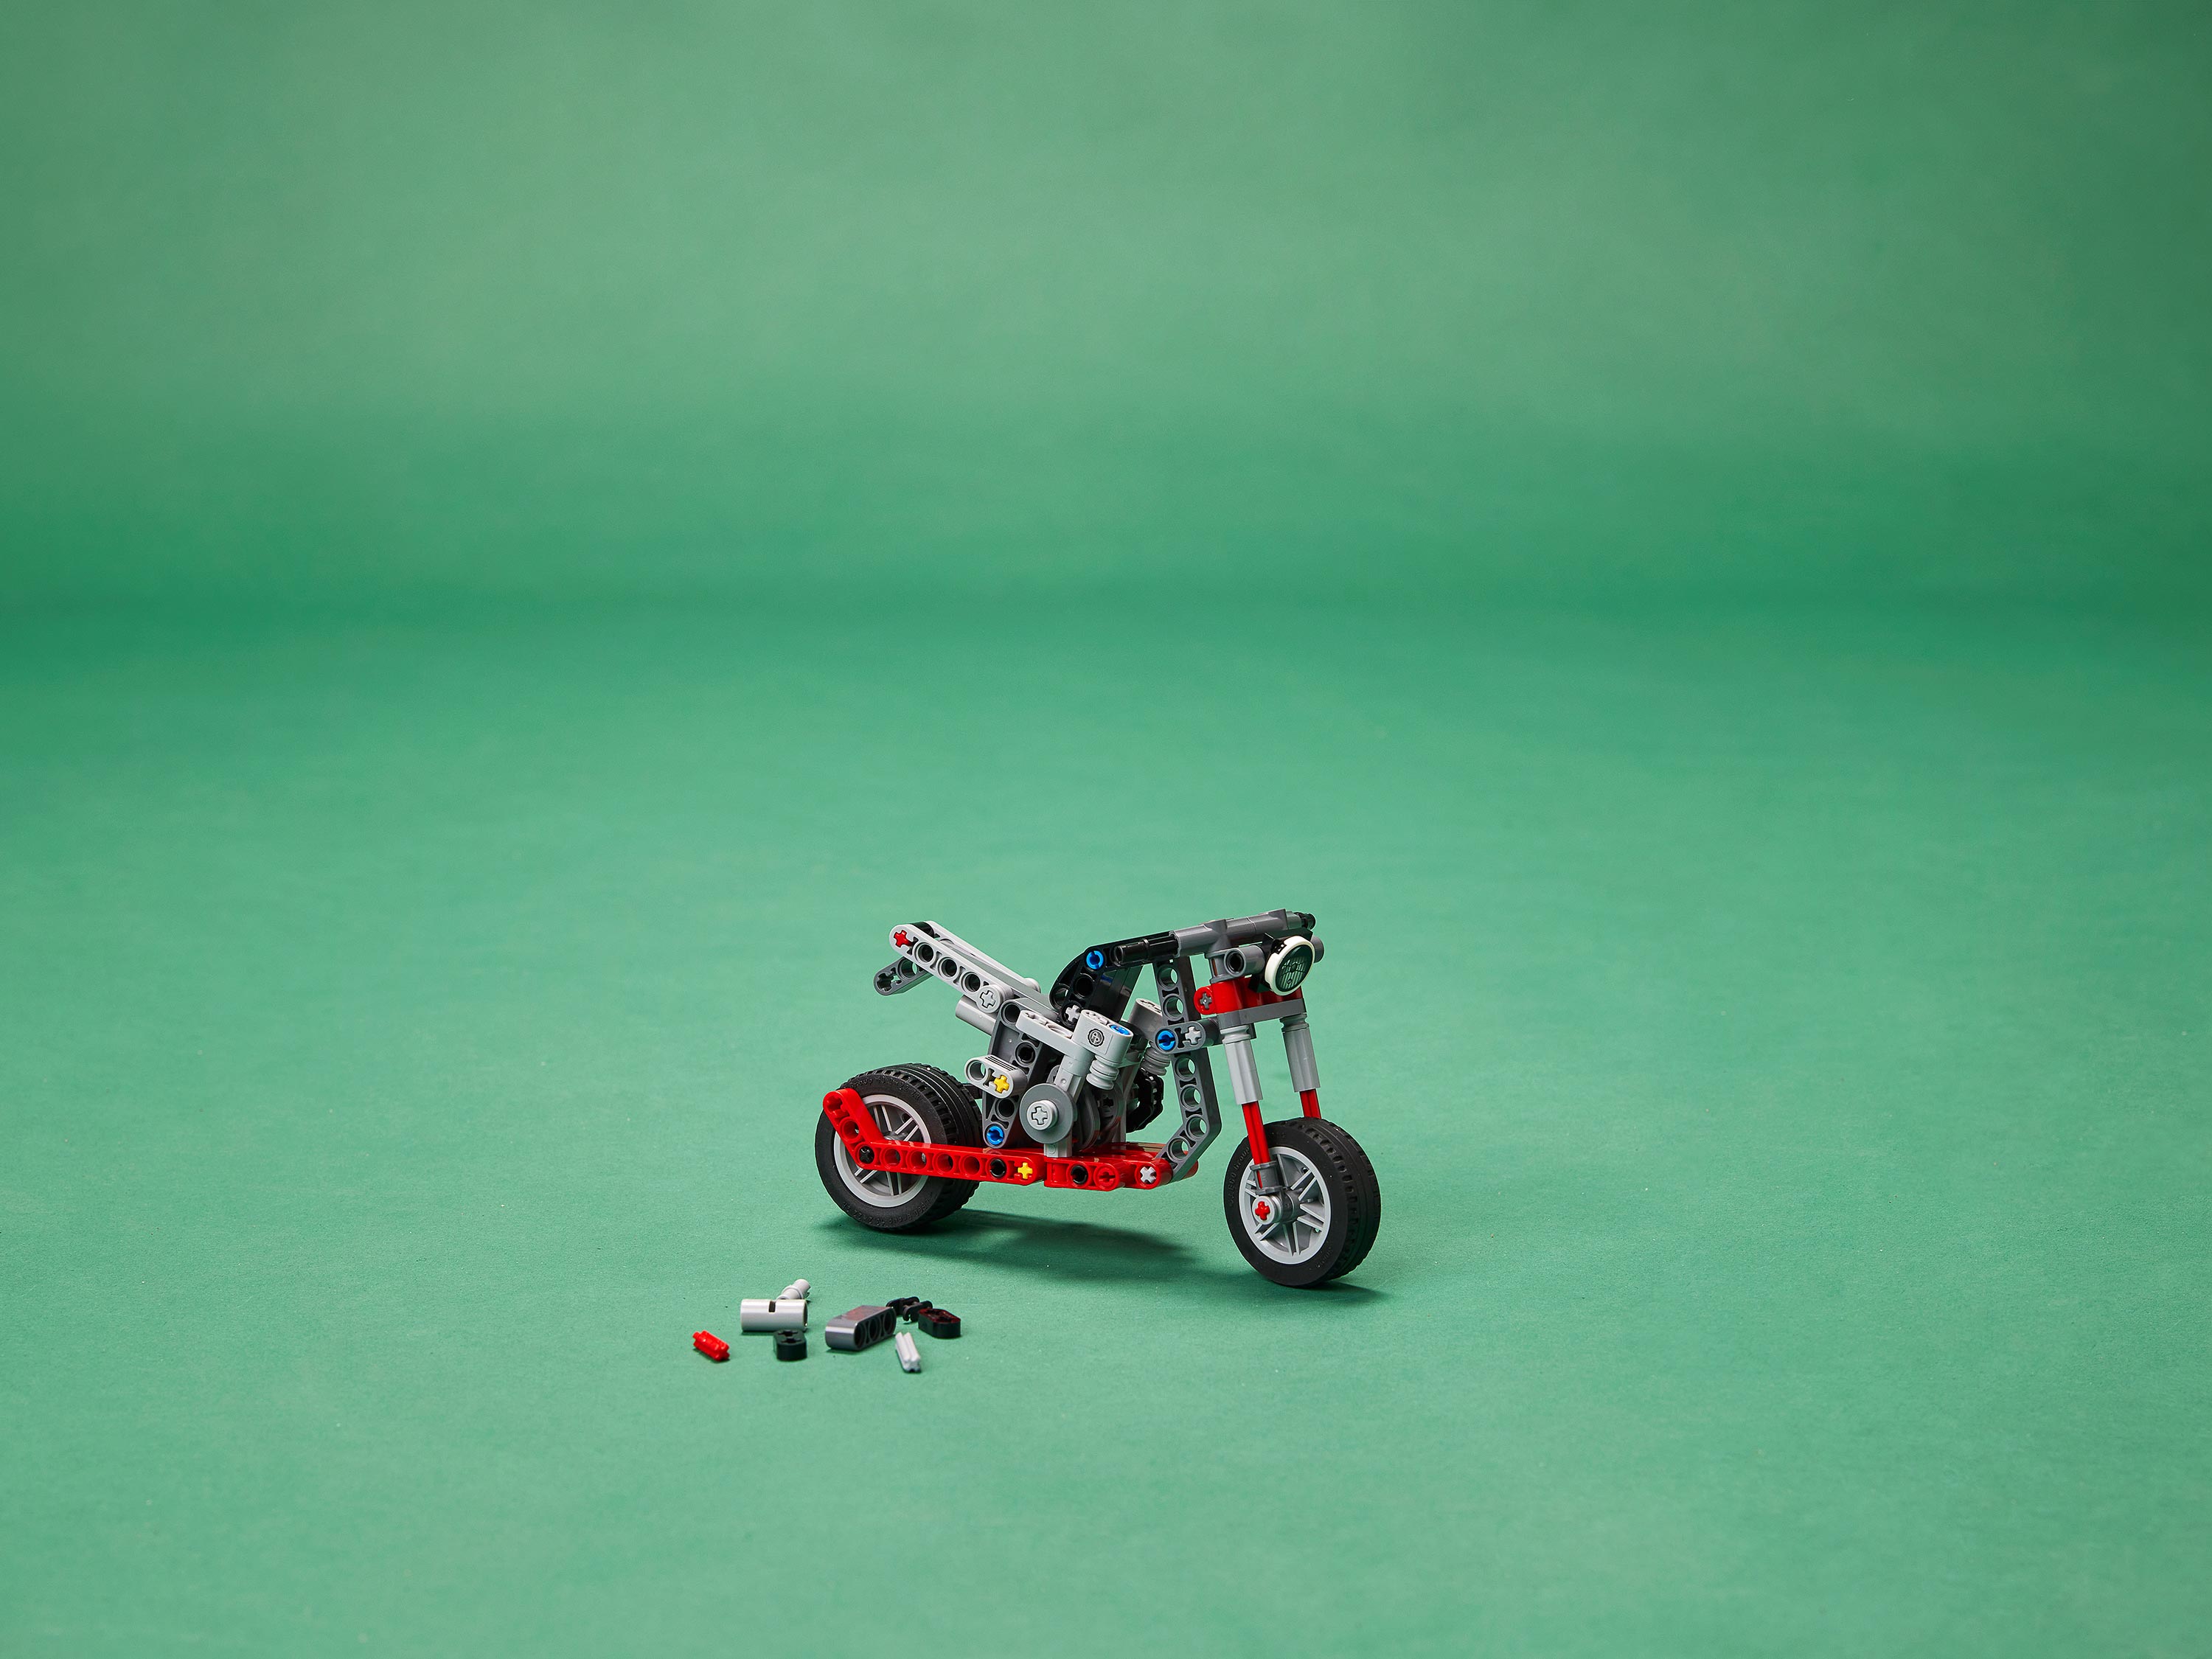 Конструктор LEGO Technic 42132 Мотоцикл